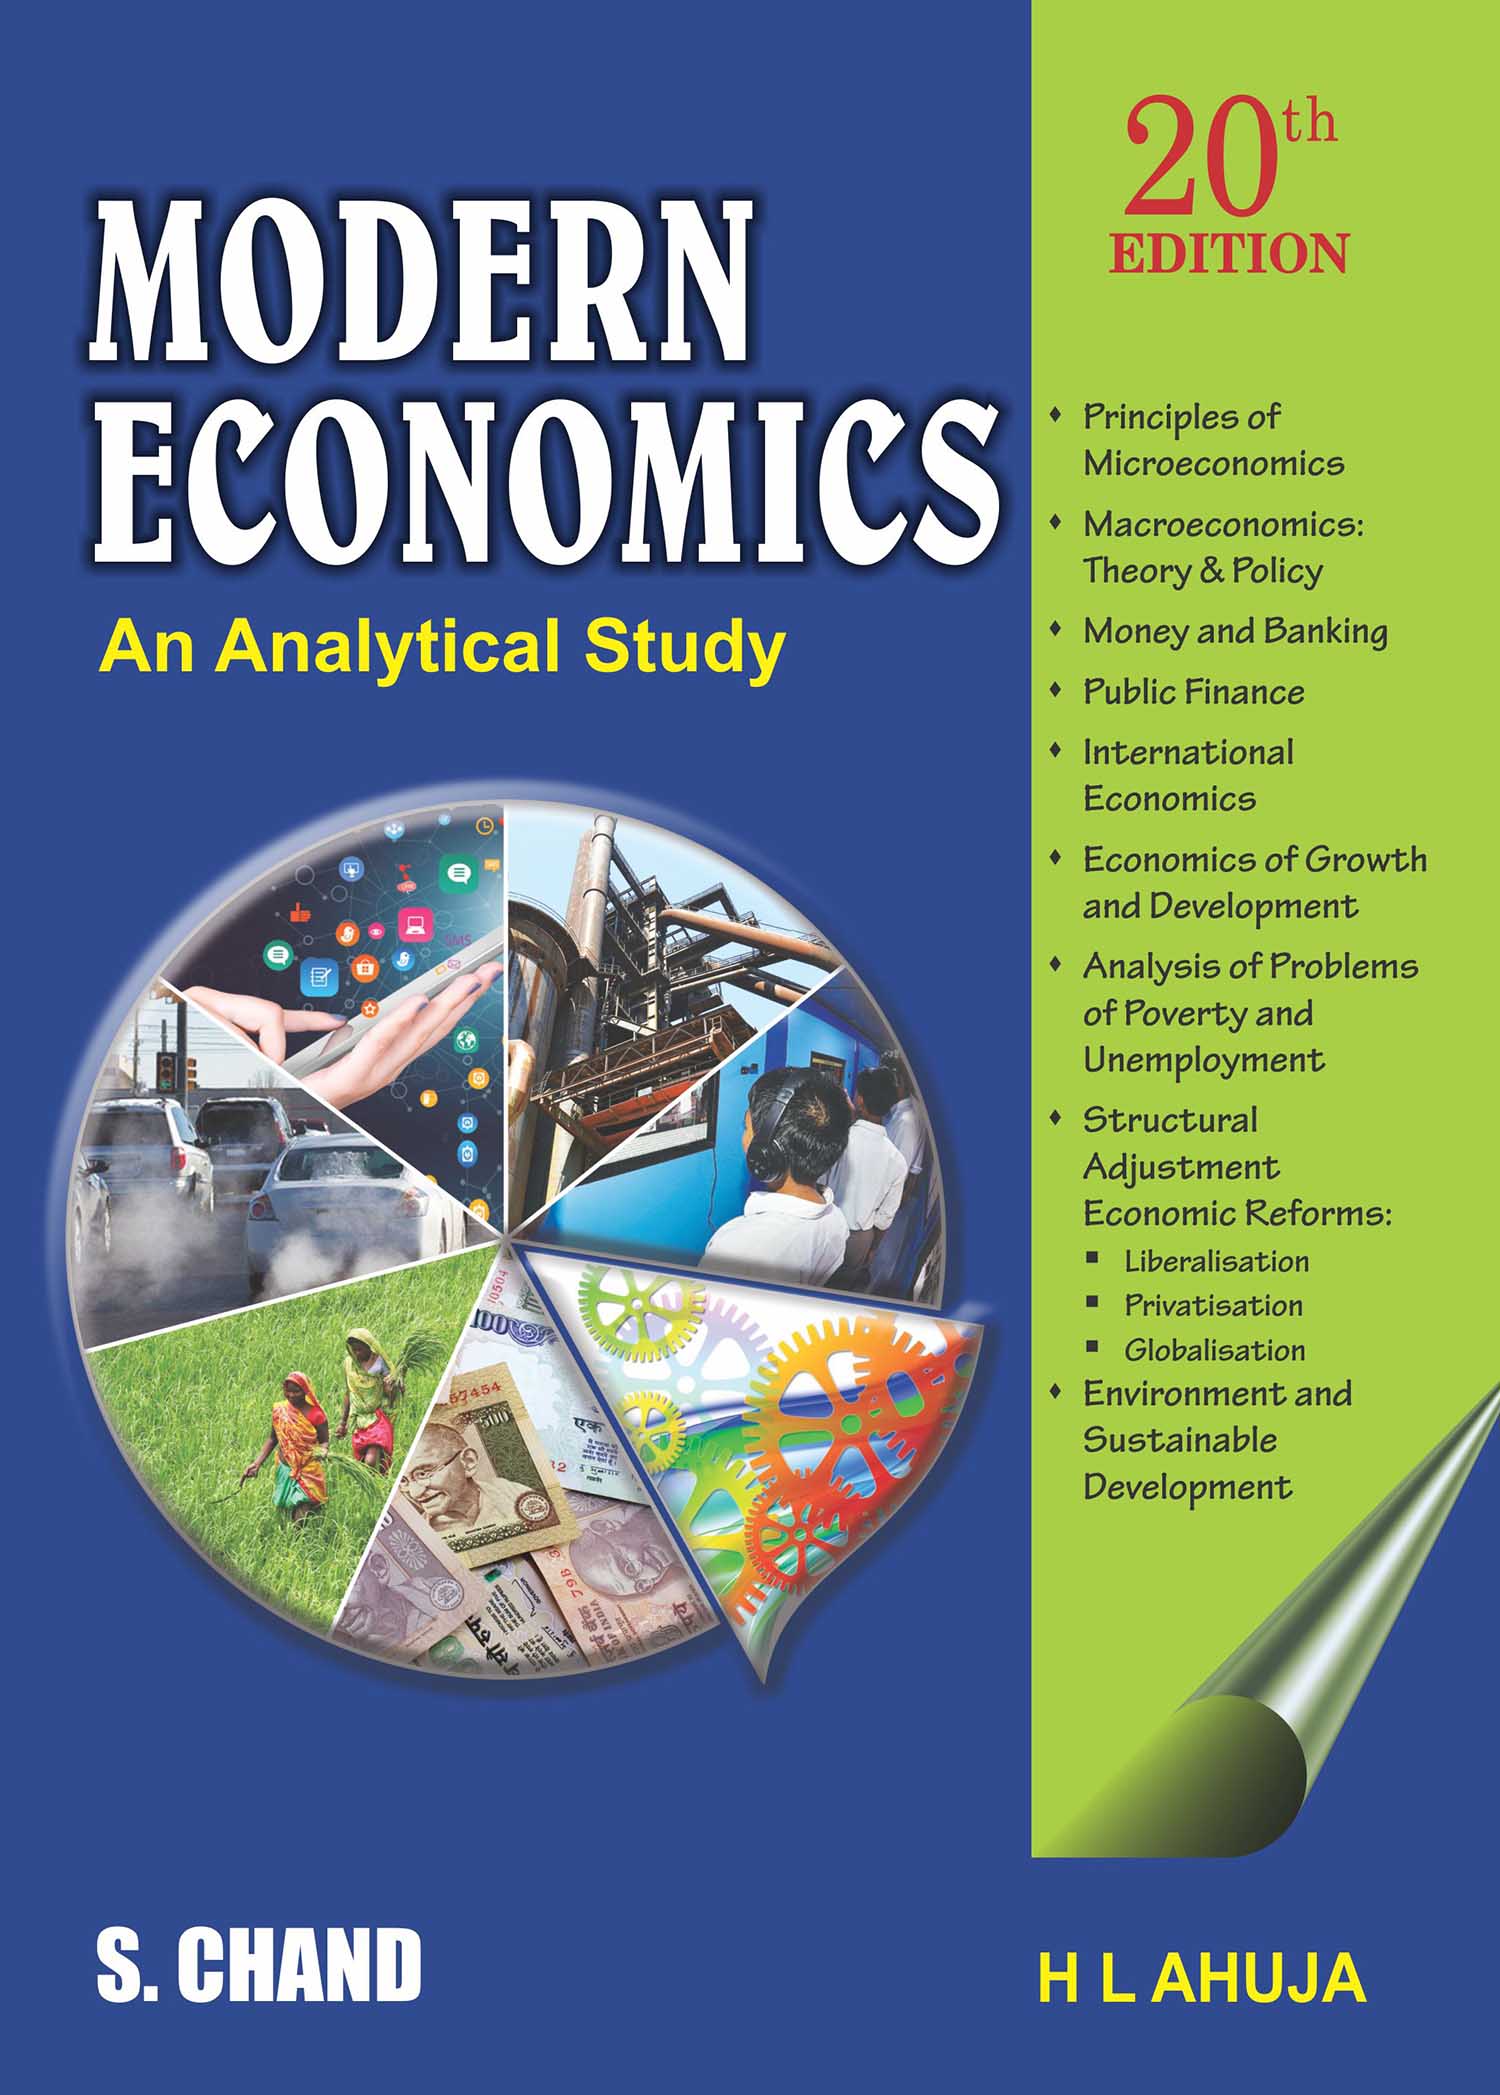 MODERN ECONOMICS: AN ANALYTICAL STUDY